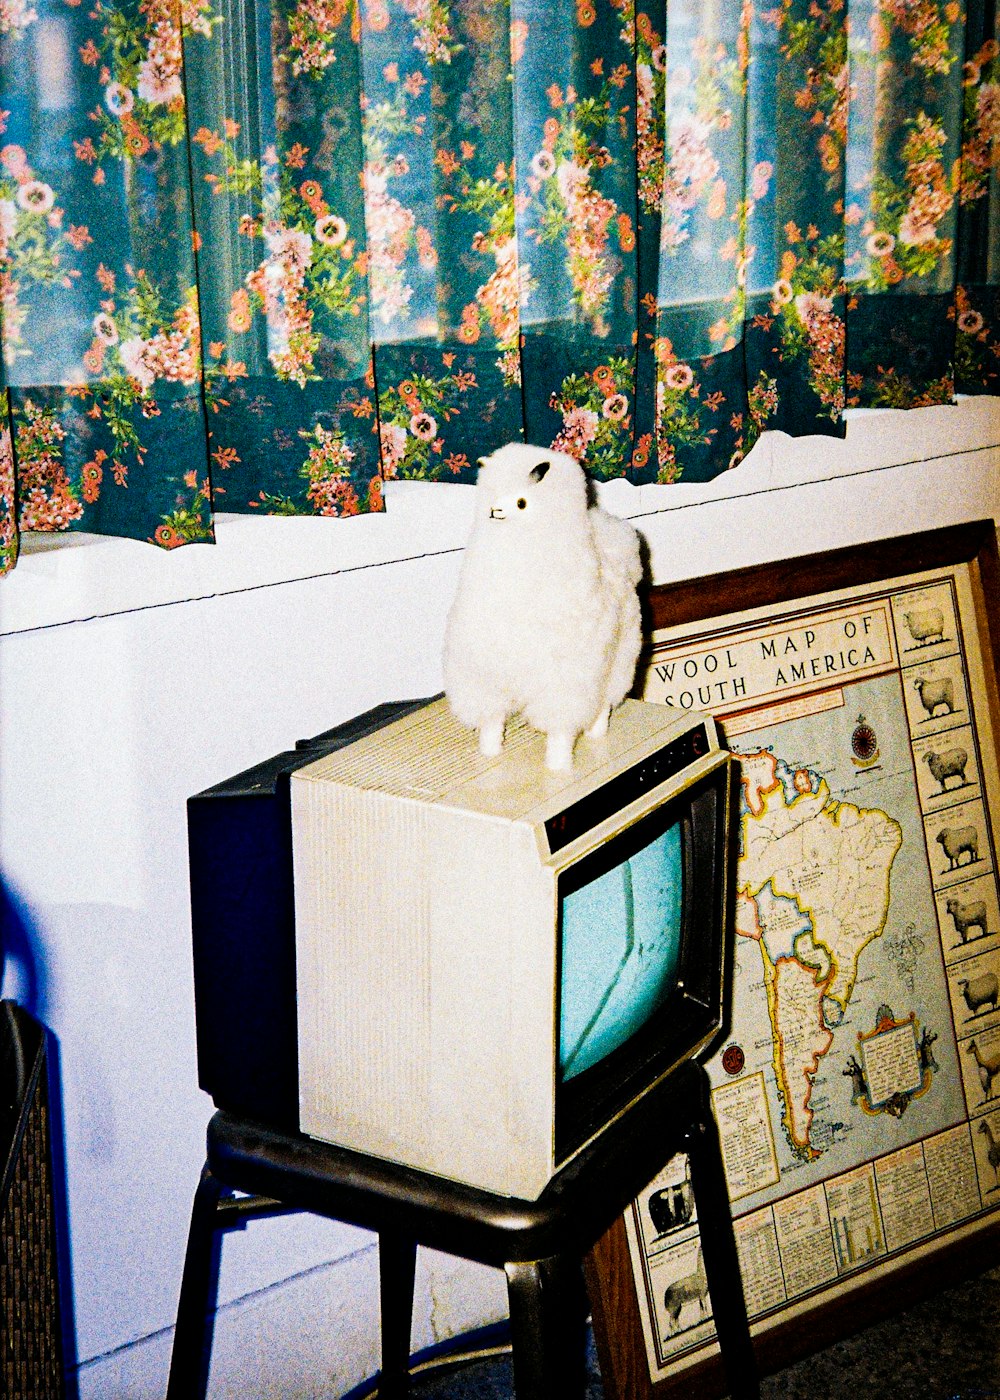 CRT TV 위에 흰 올빼미